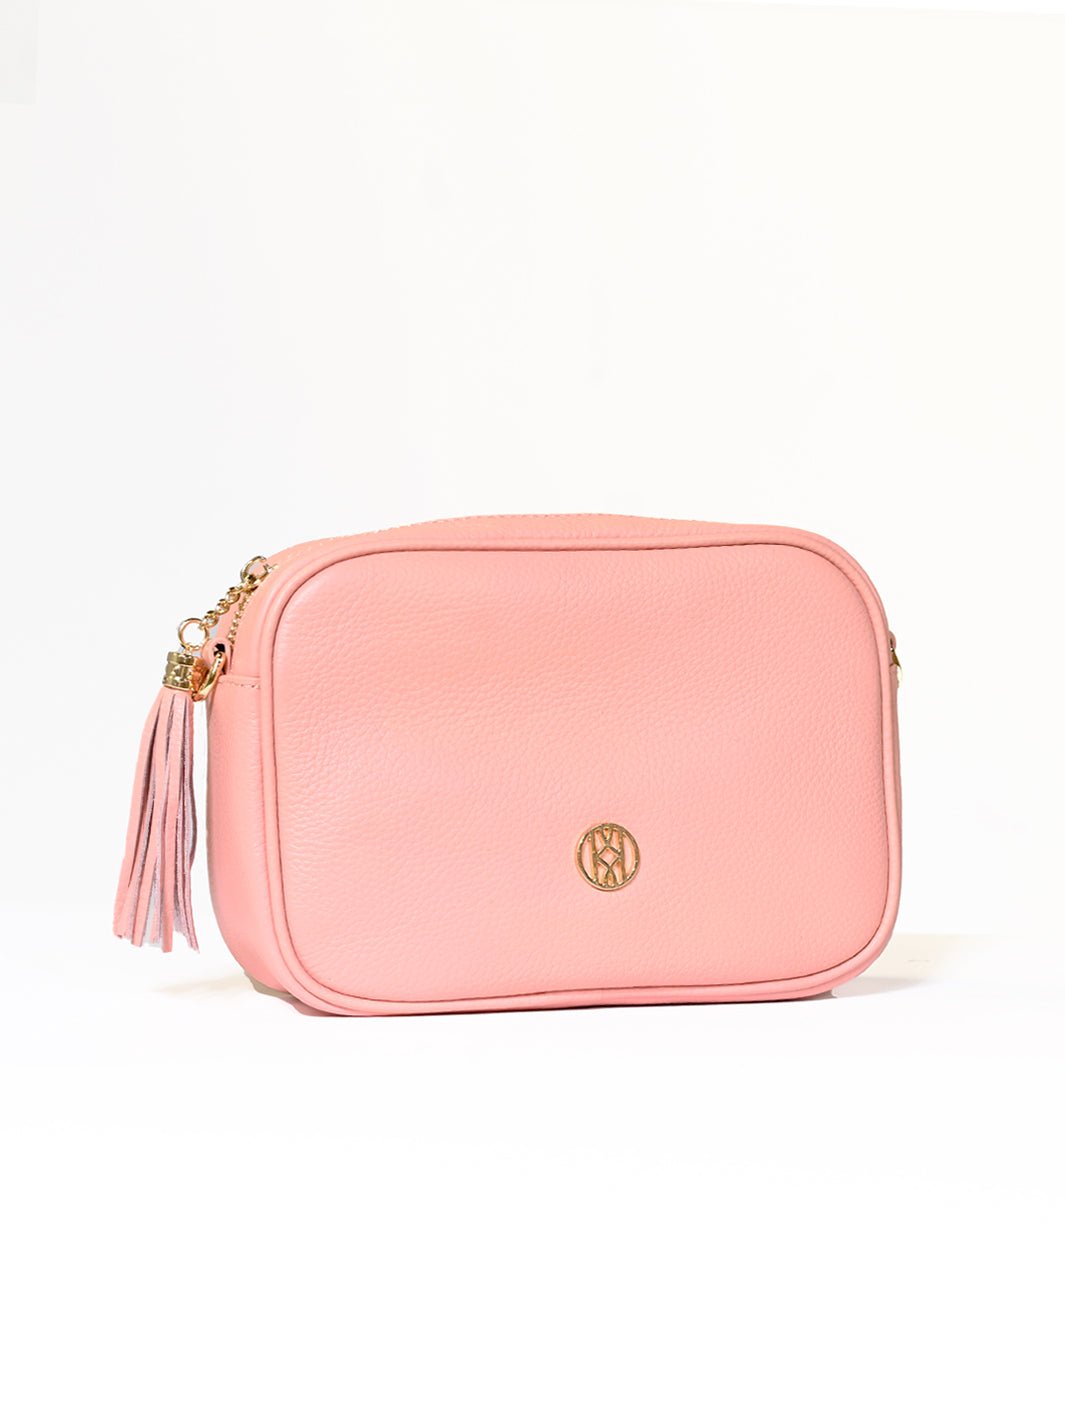 Leather Side Bag Pink ACCESSORY - HANDBAG jeanpierreklifa.com   